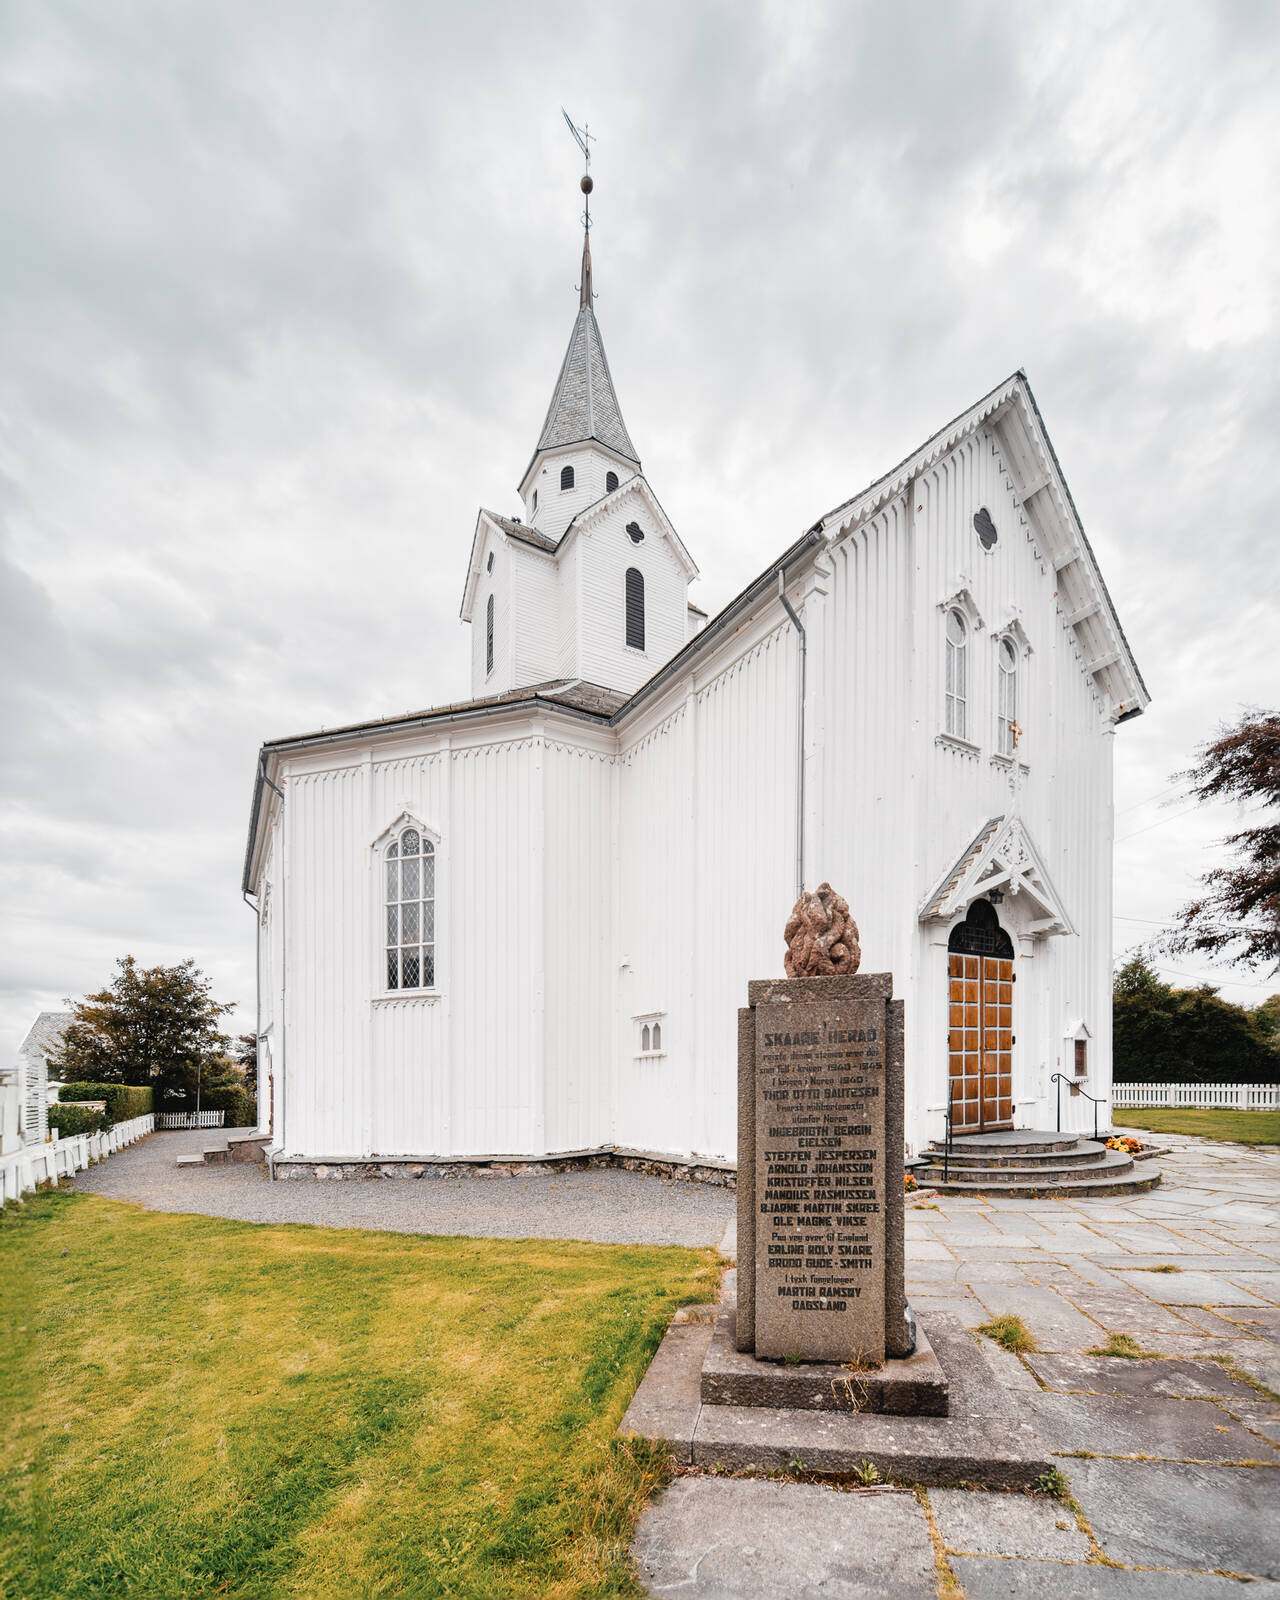 Image of Skåre Kirke (Skåre Church) by Mathew Browne